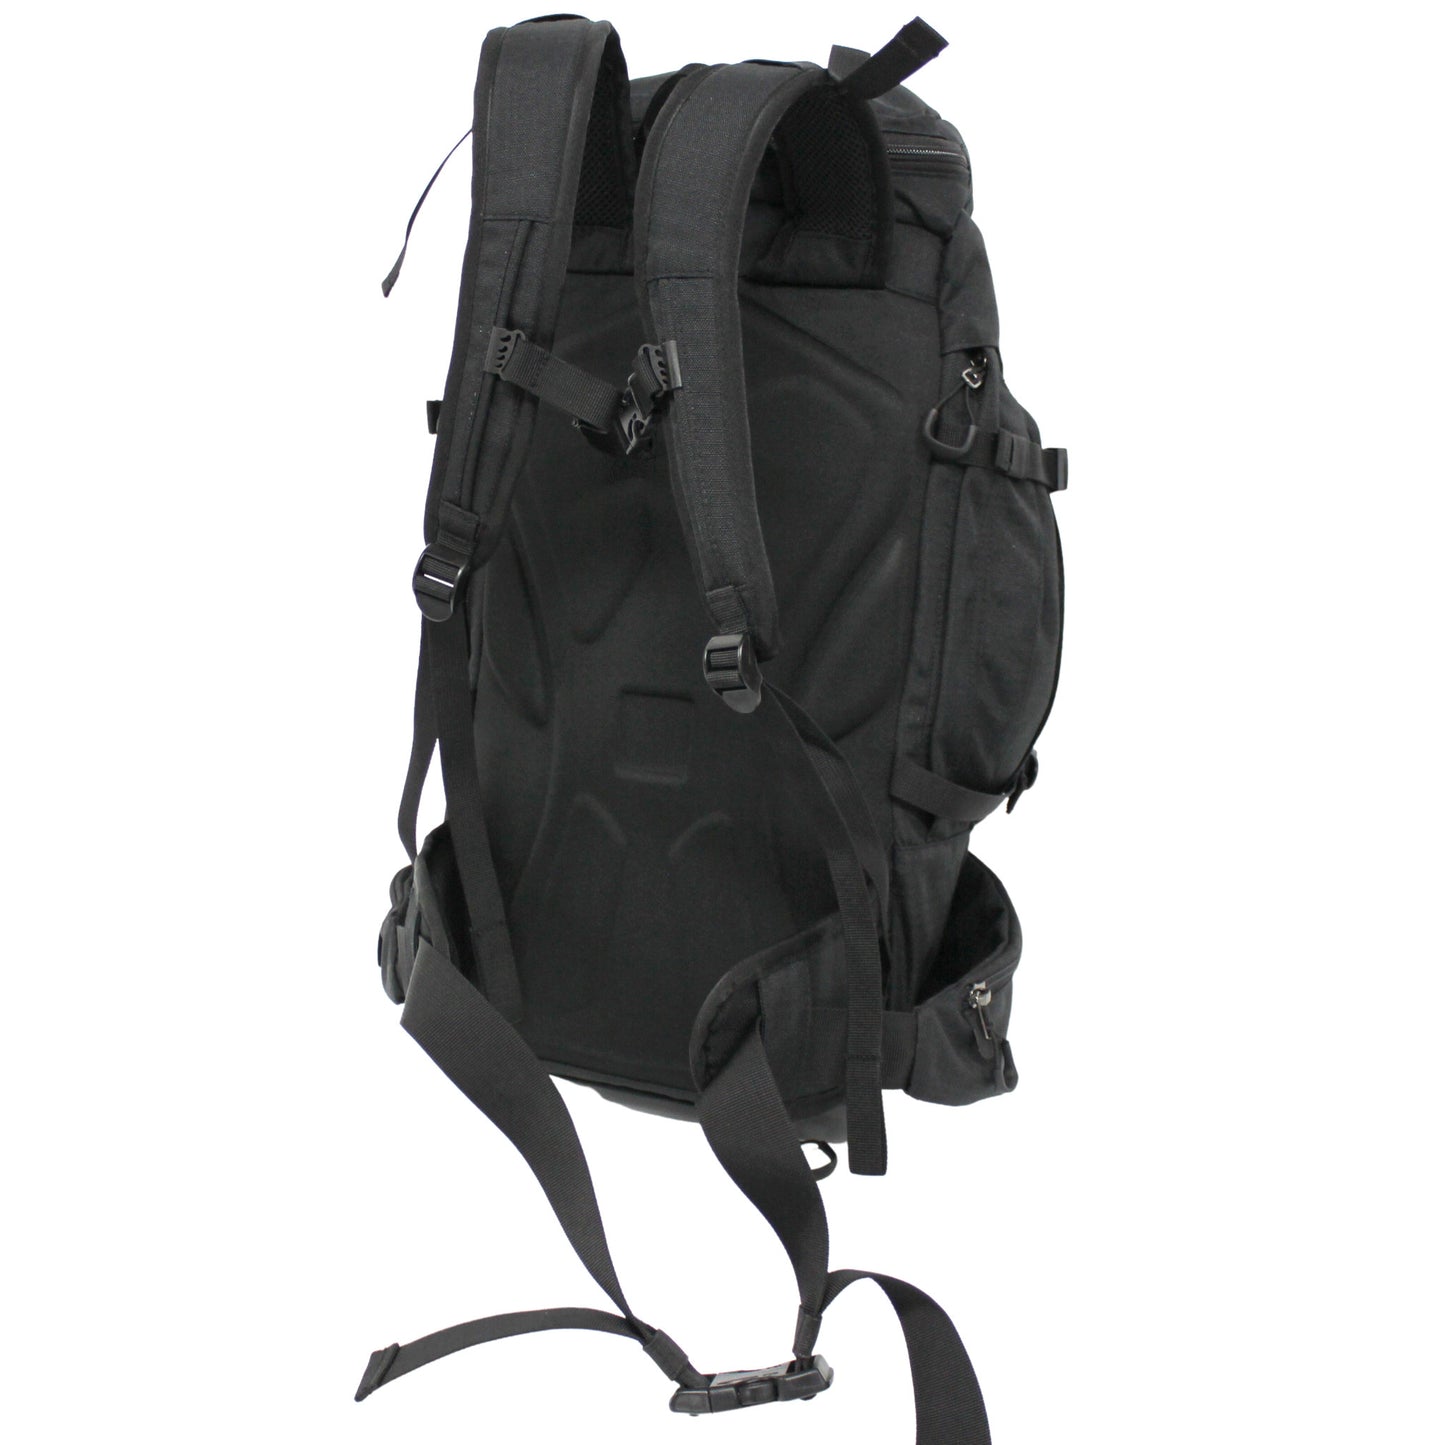 RU33 Lighter and spacious alpine and hiking backpack 33 liters black